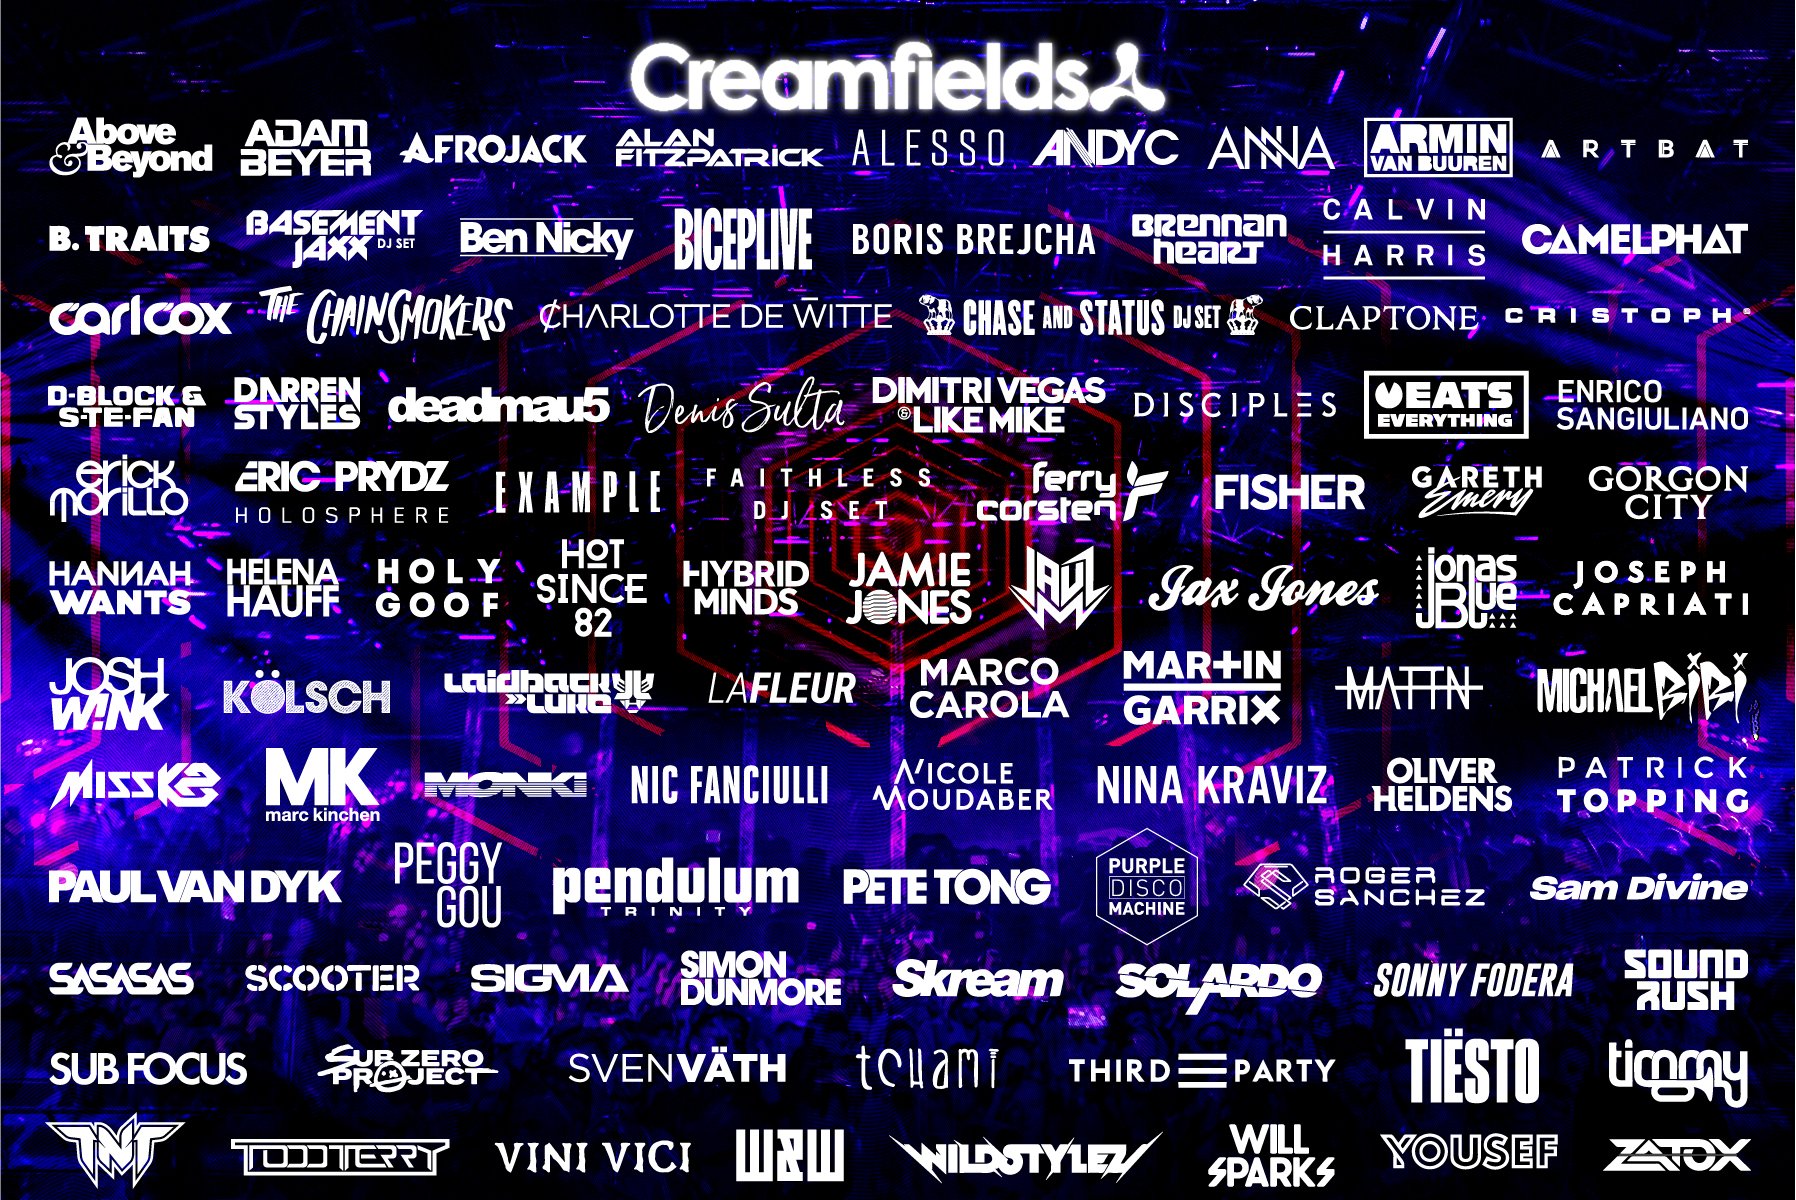 2020 Creamfields lineup 